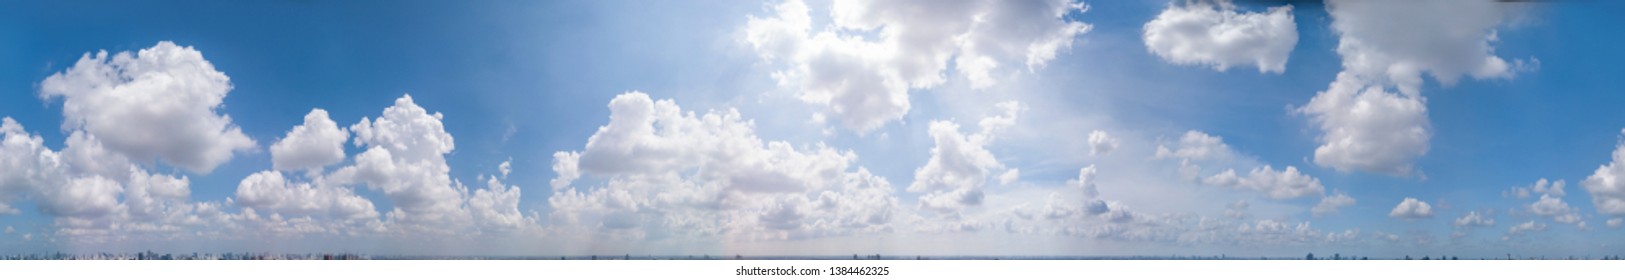 360 Seamless Sunny Sky with Cloud Panorama in Spherical (Equirectangular) format - Bangkok Thailand
